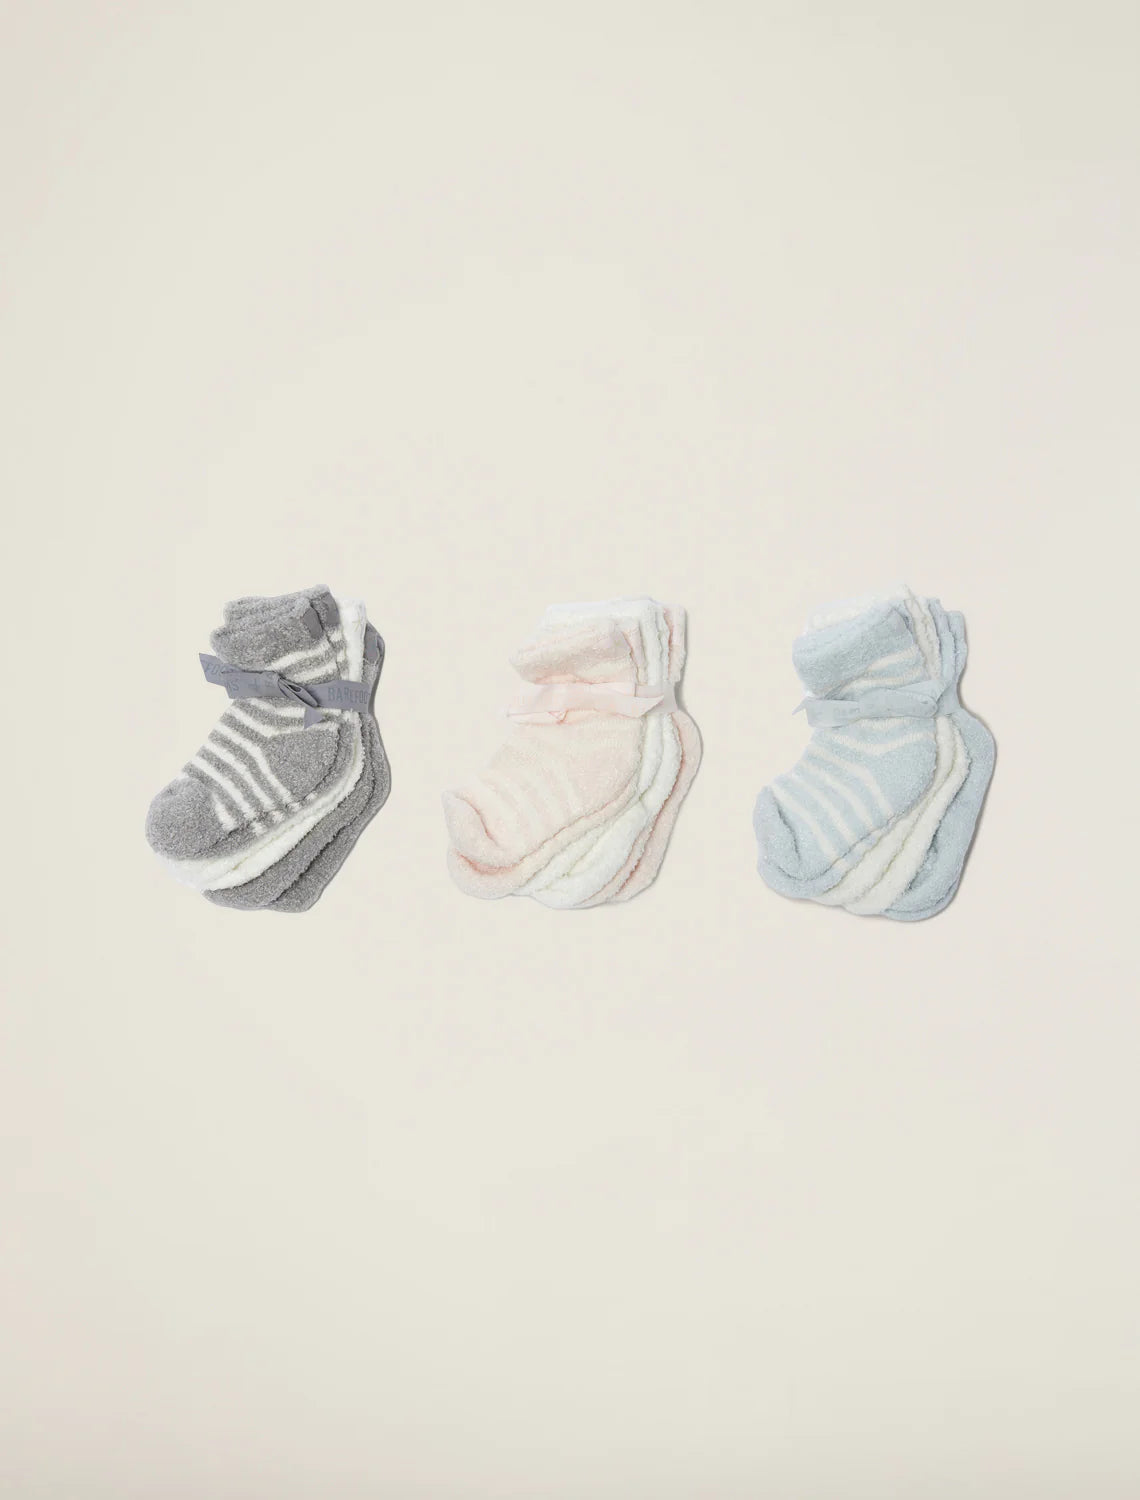 CozyChic 3 Pair Infant Sock Set | Pink